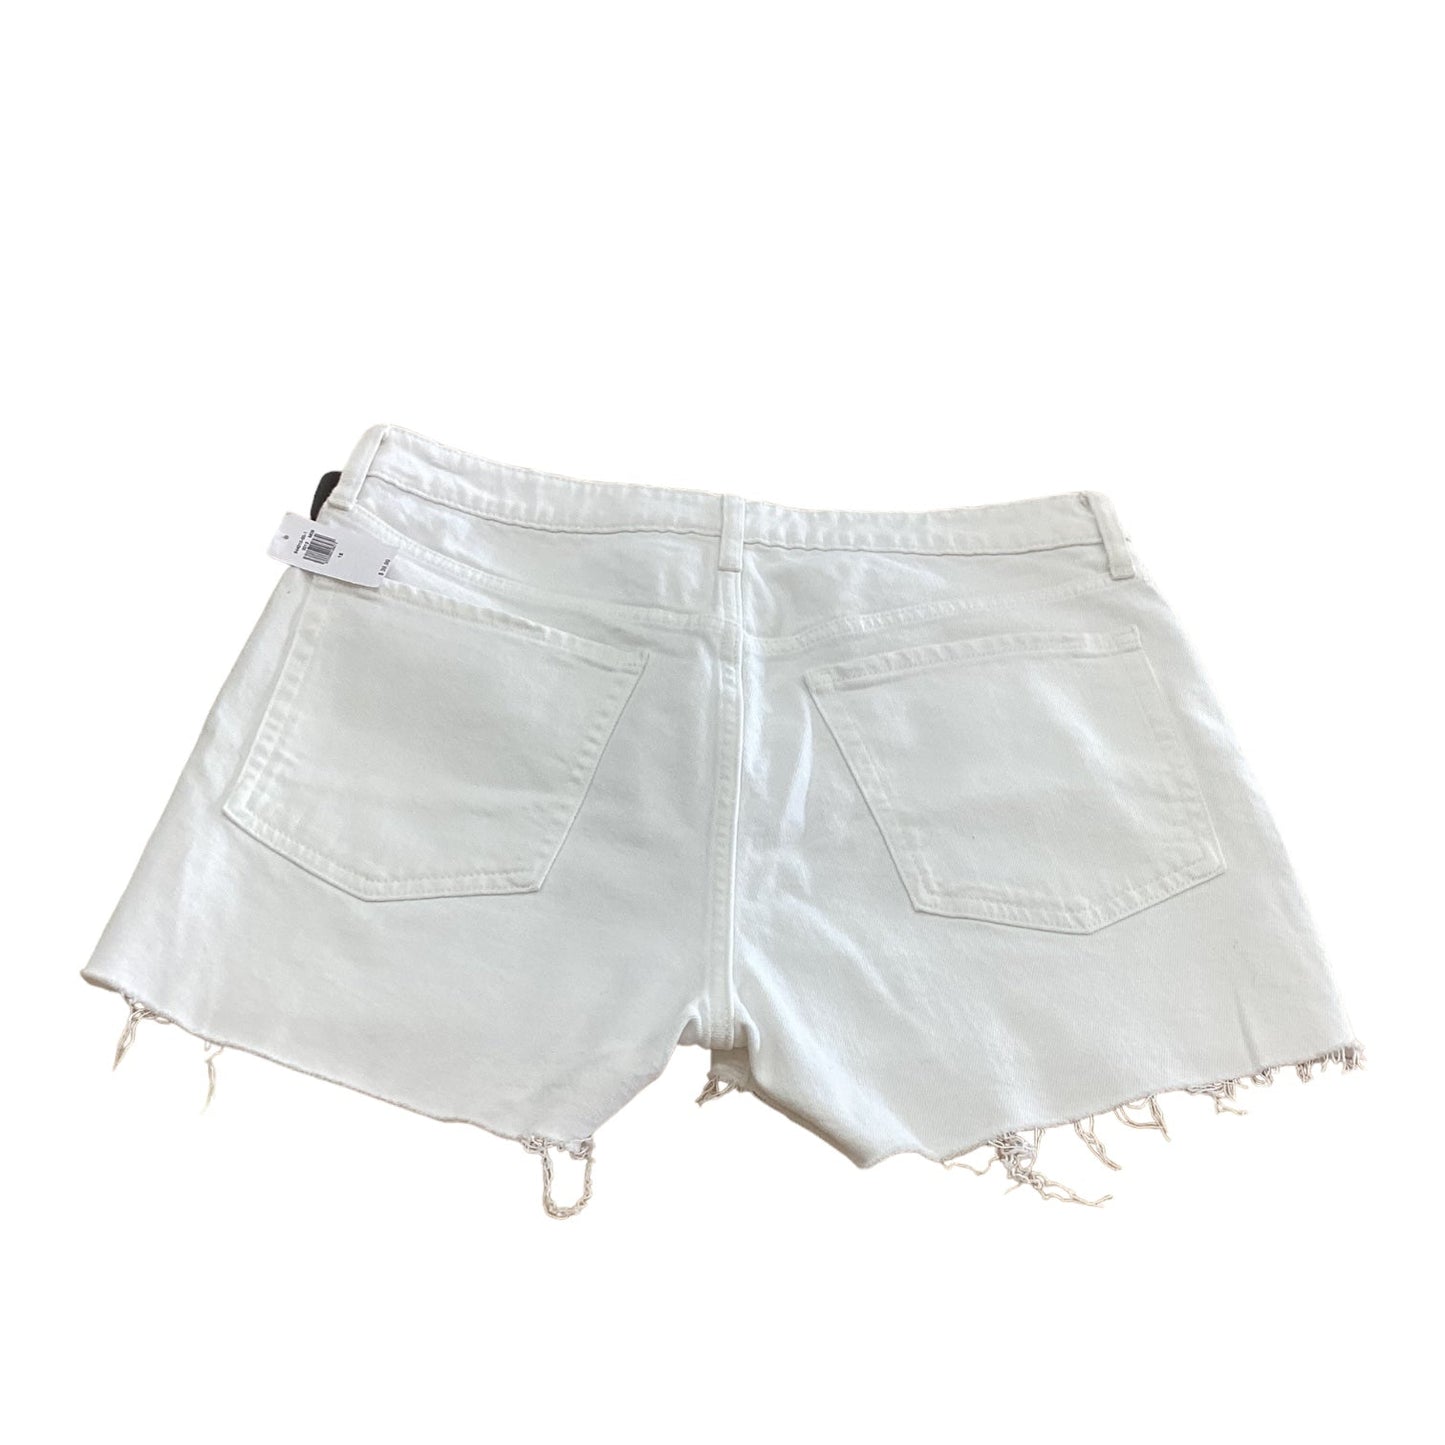 White Shorts Old Navy, Size 12